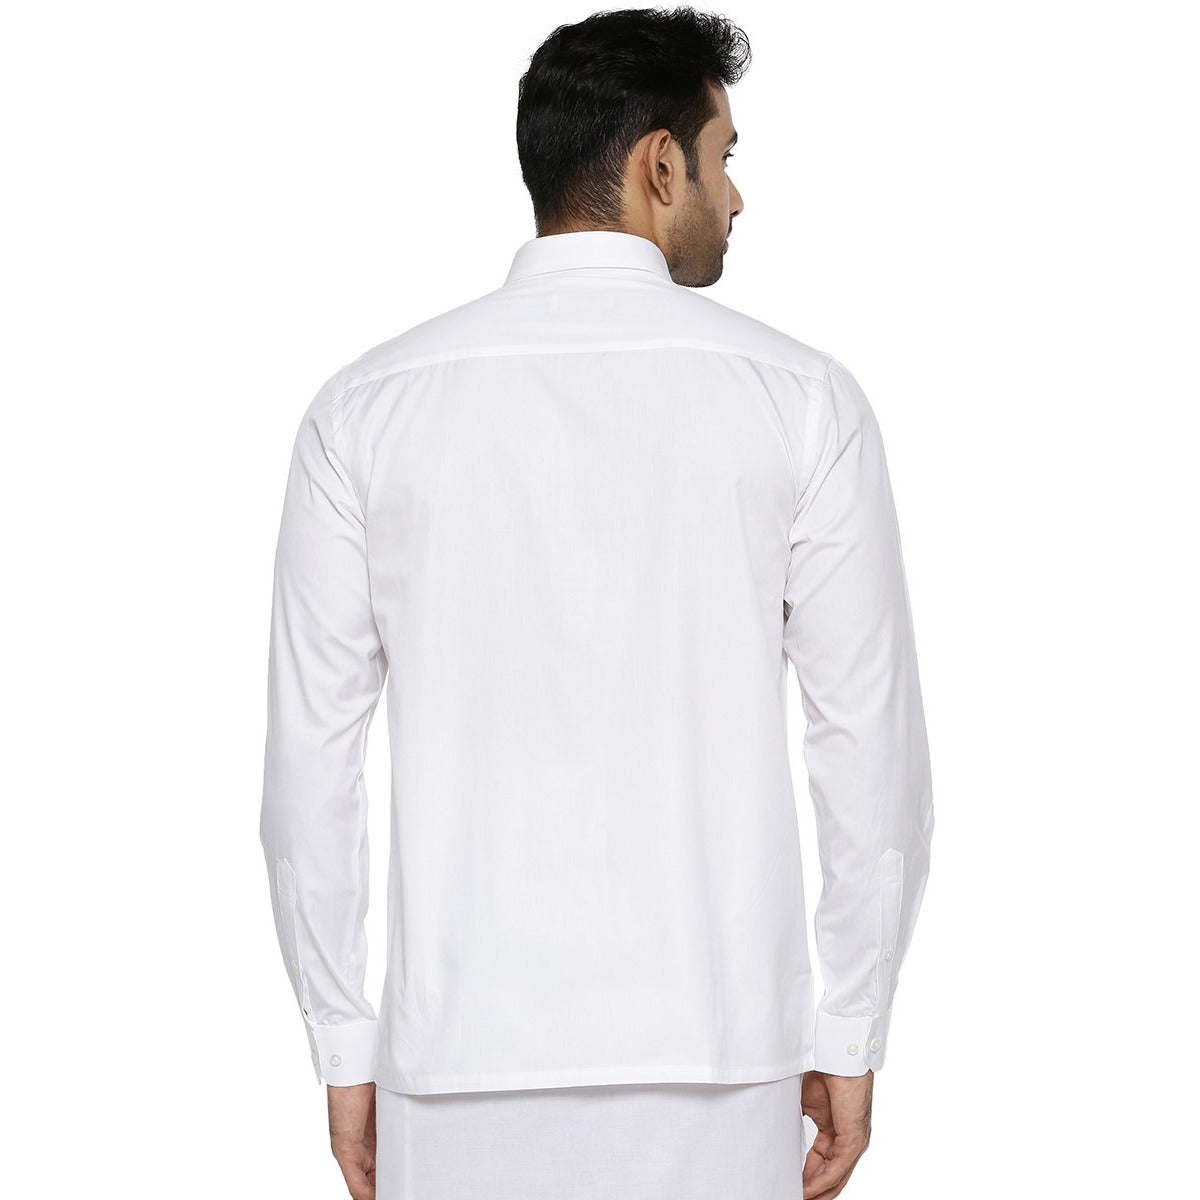 Mens Cotton White Shirt Full Sleeves Royal Cotton-Back view